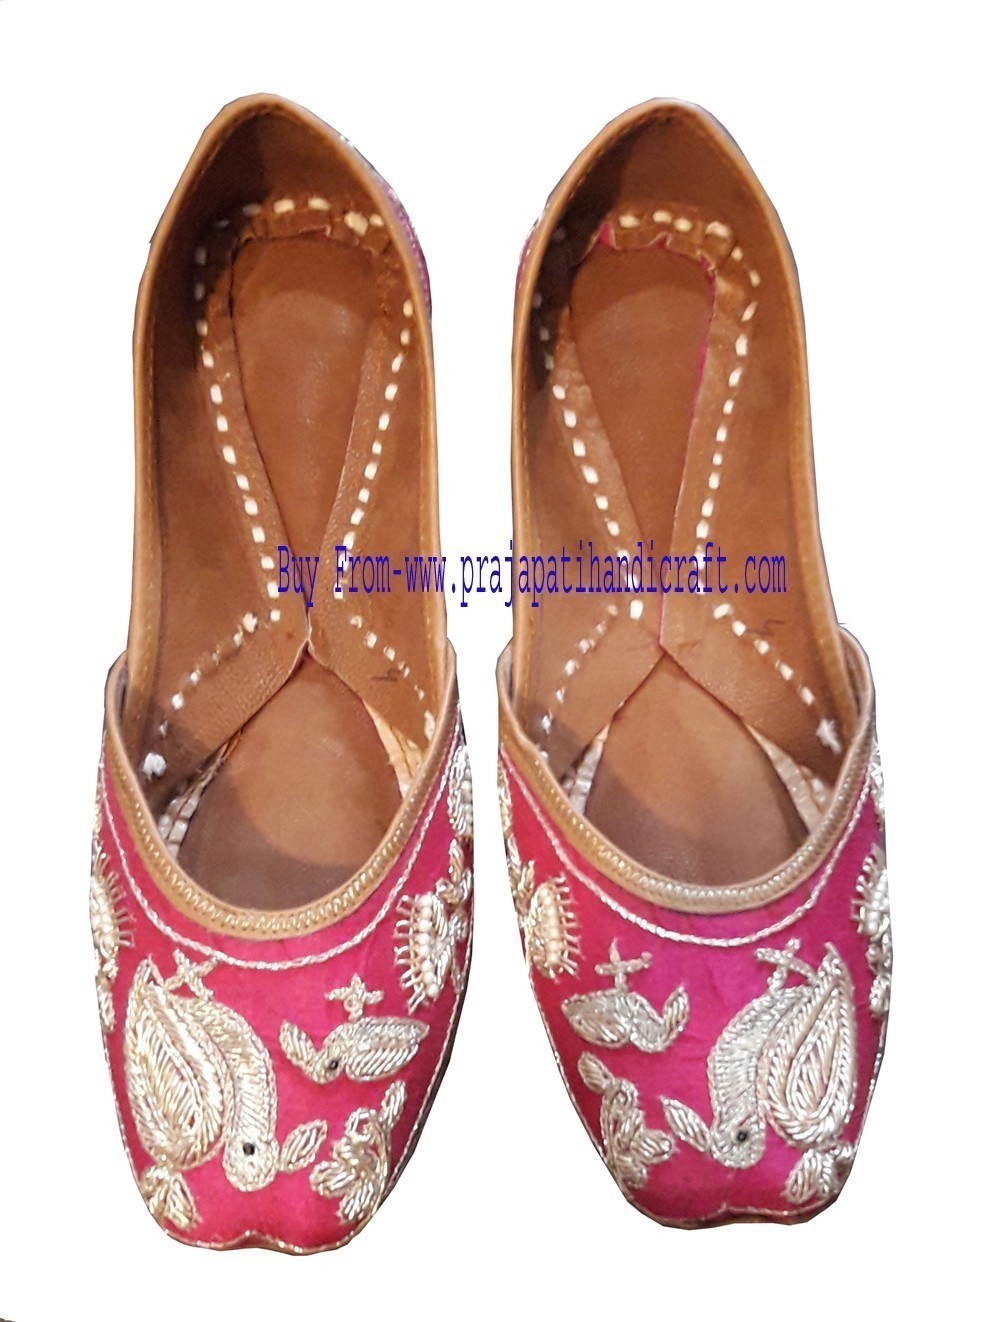 punjabi jutti khussa shoes indian shoes mojari